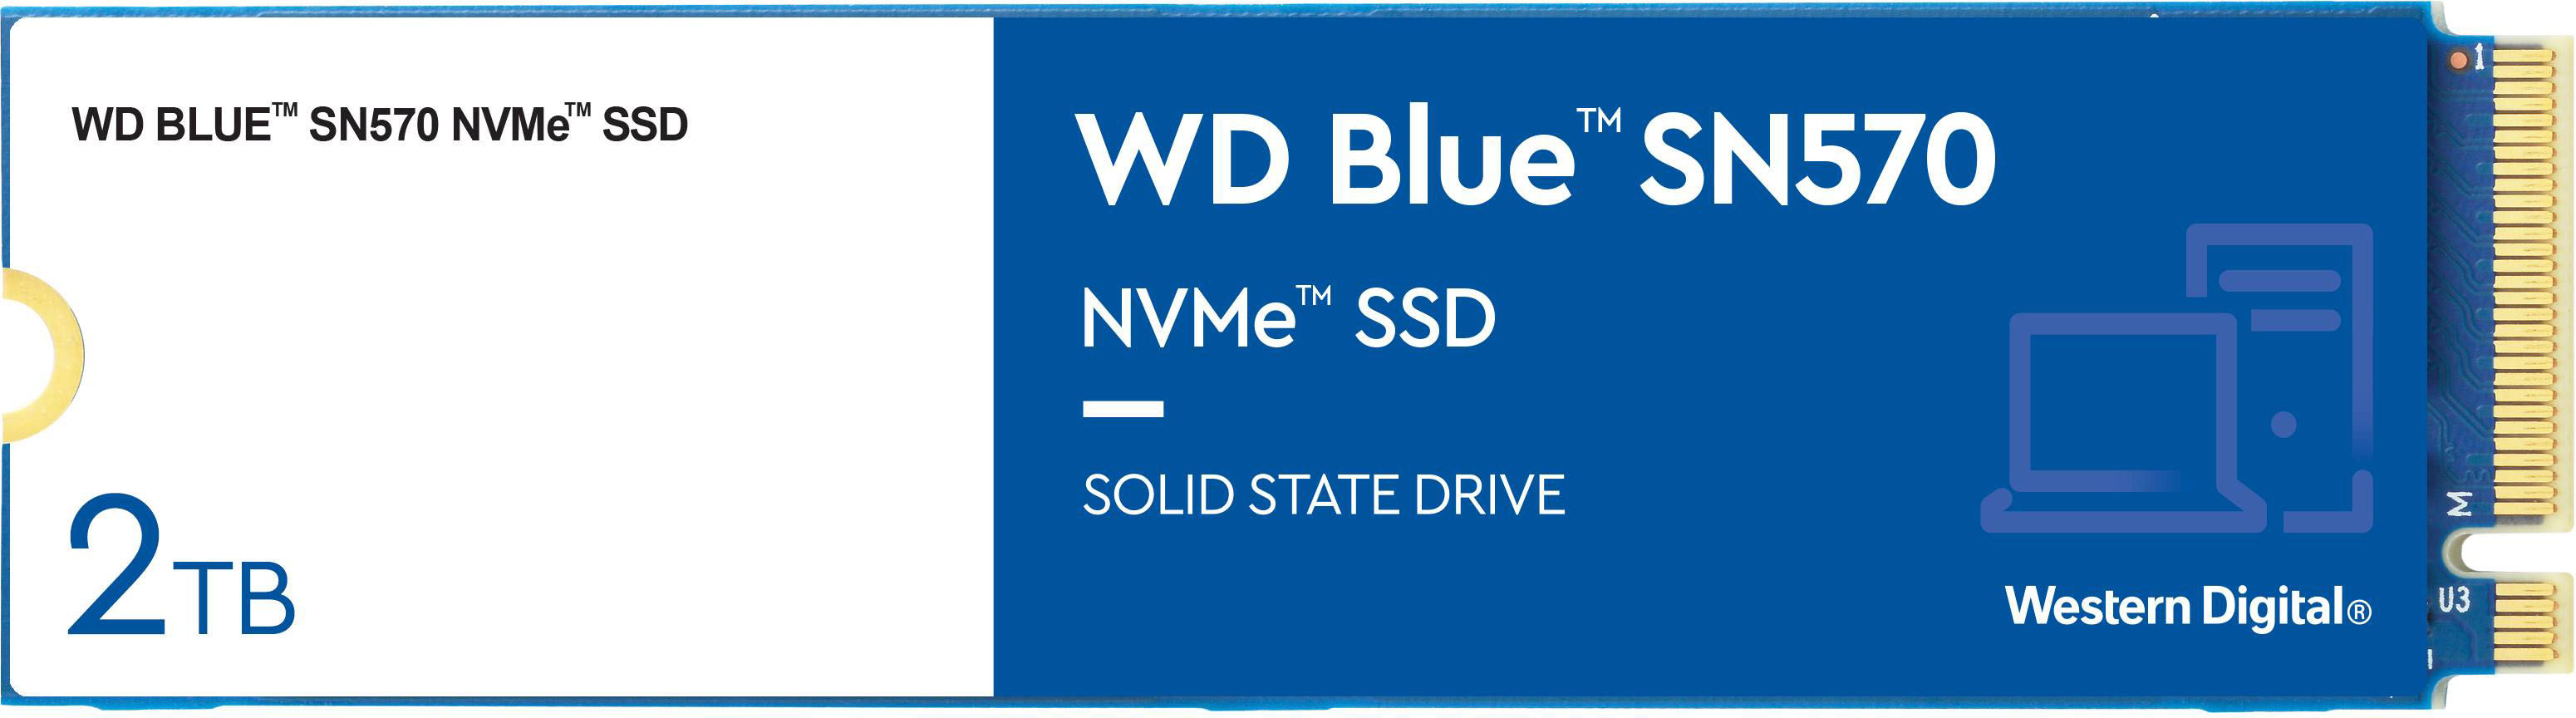 M.2 2280 Hard Drives, SSD & Storage - Best Buy